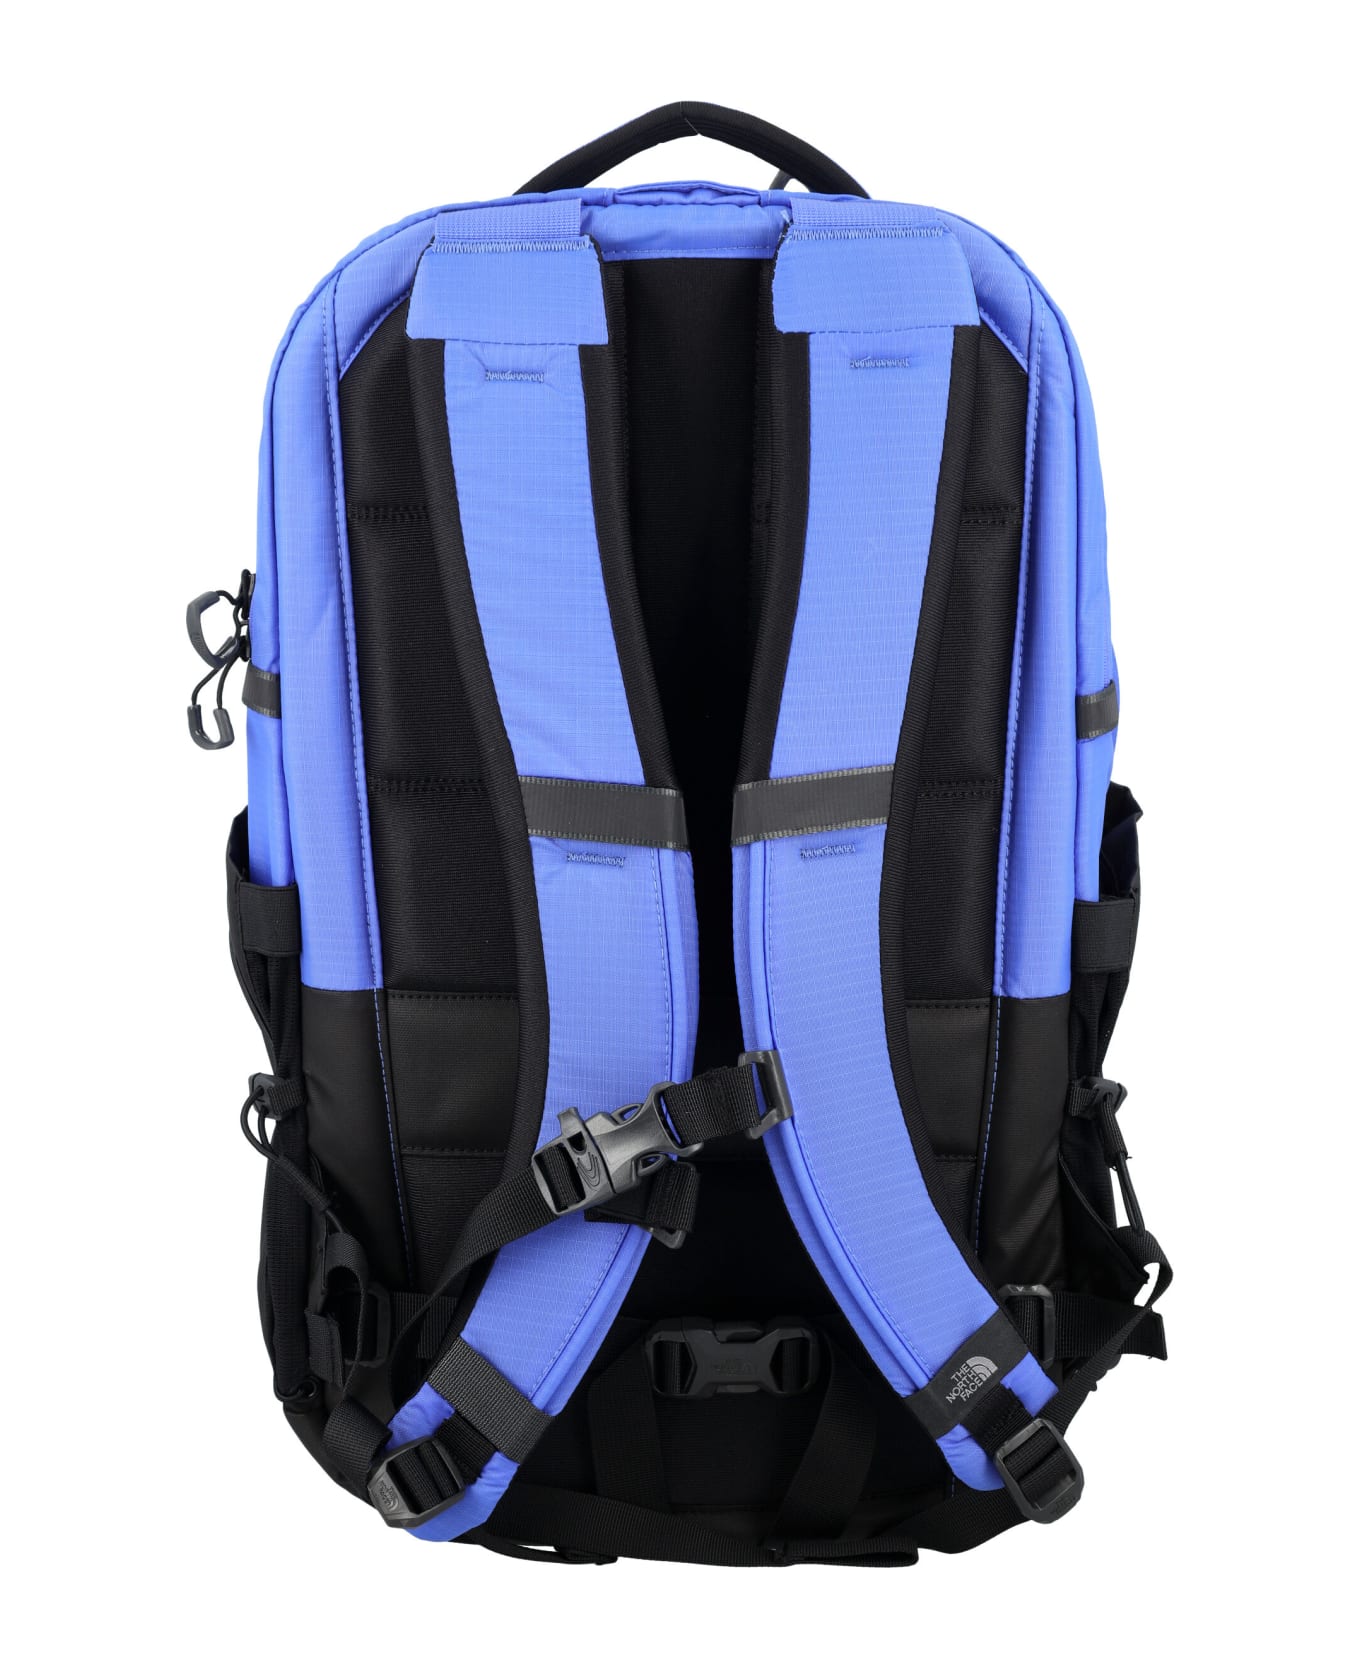 The North Face Borealis Backpack - BLUE ROYAL バックパック